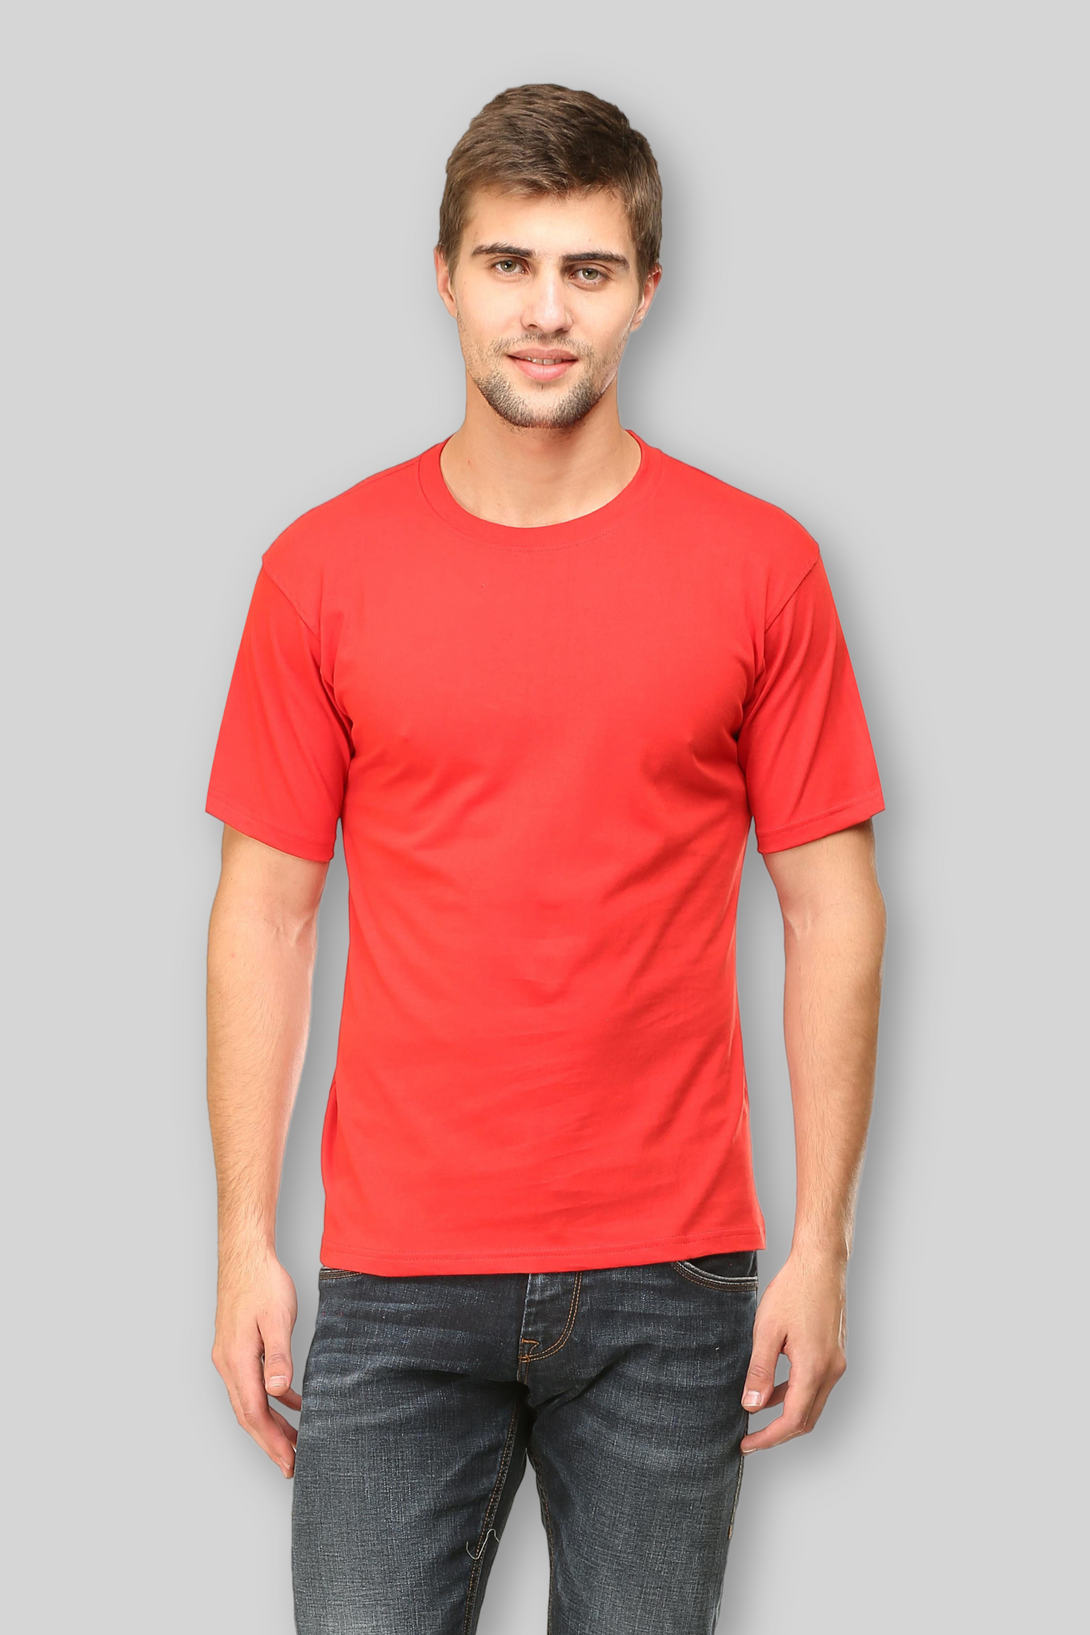 Red T-Shirt For Men - WowWaves - 2